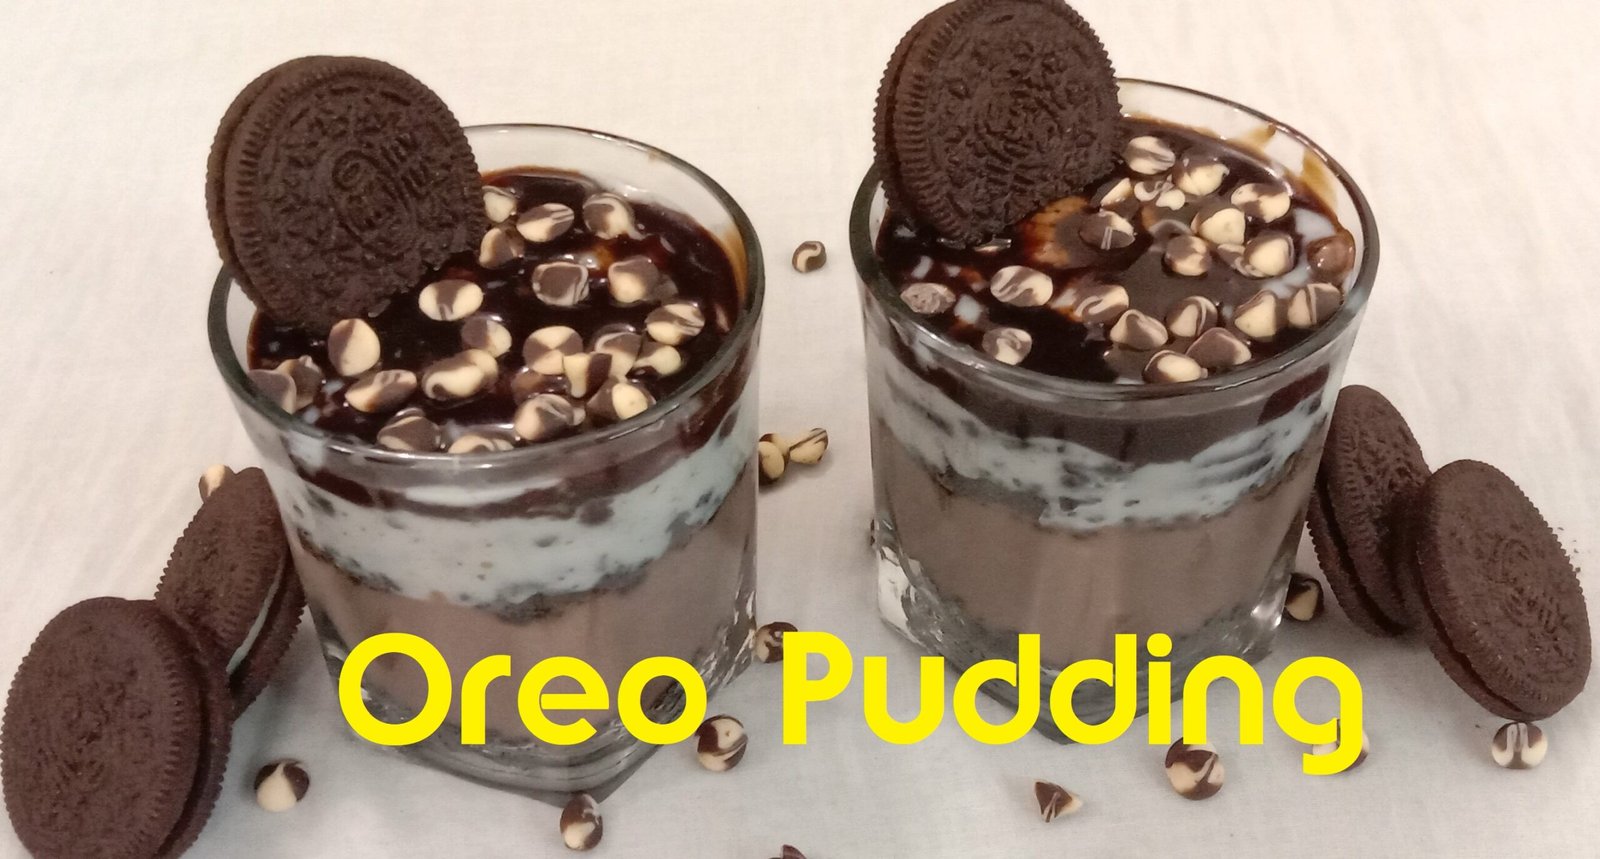 Oreo Pudding in glasses, Oreo pudding.